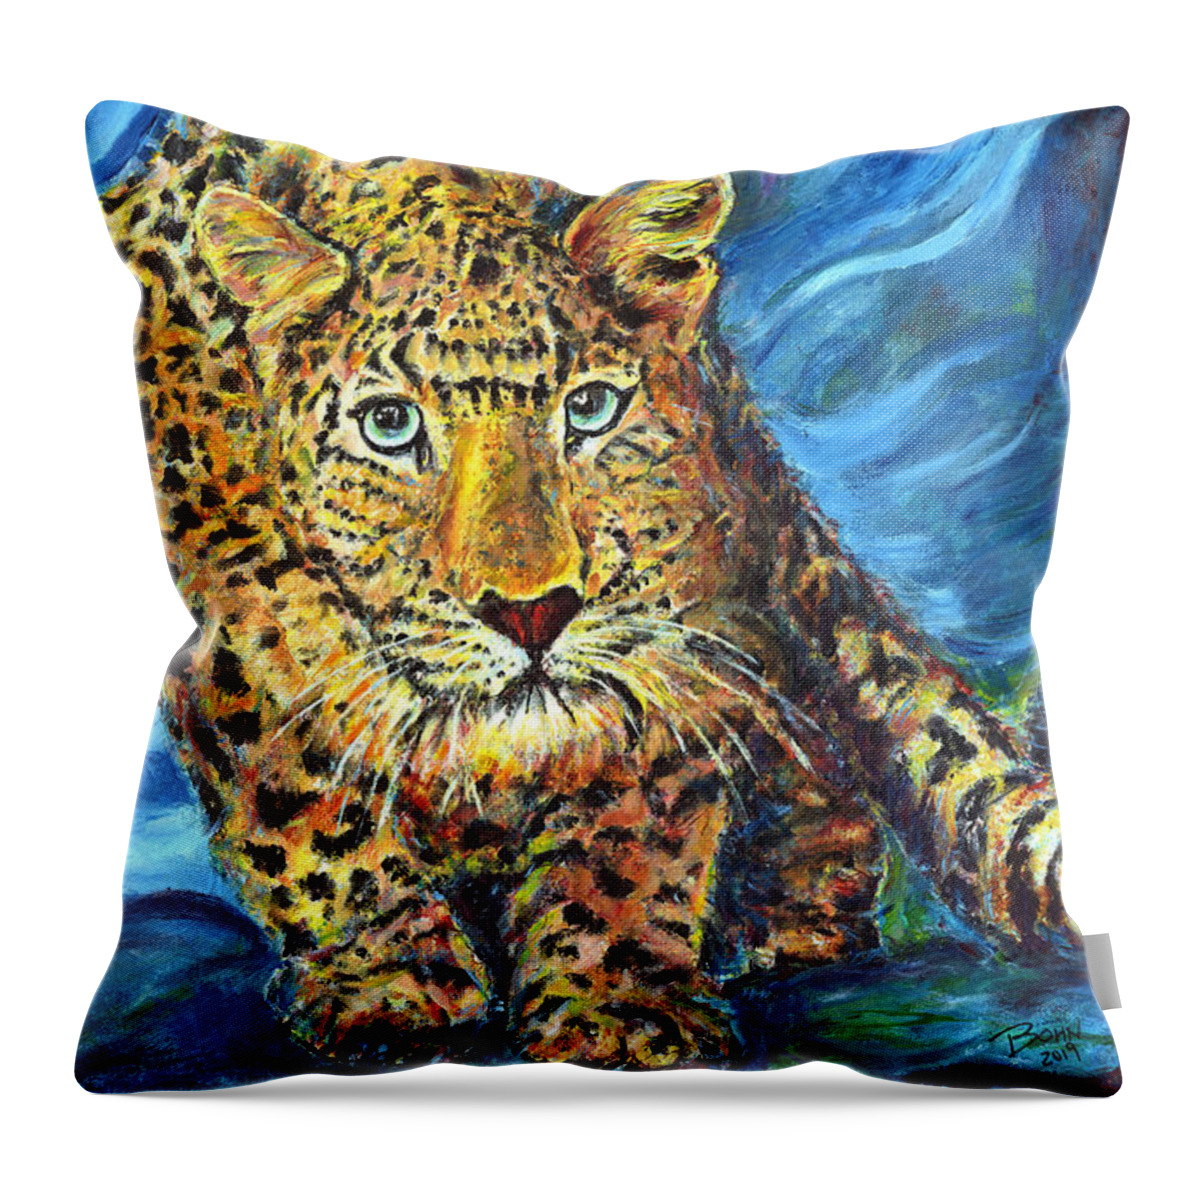 Amur Leopard Throw Pillow featuring the painting Amur Leopard by John Bohn